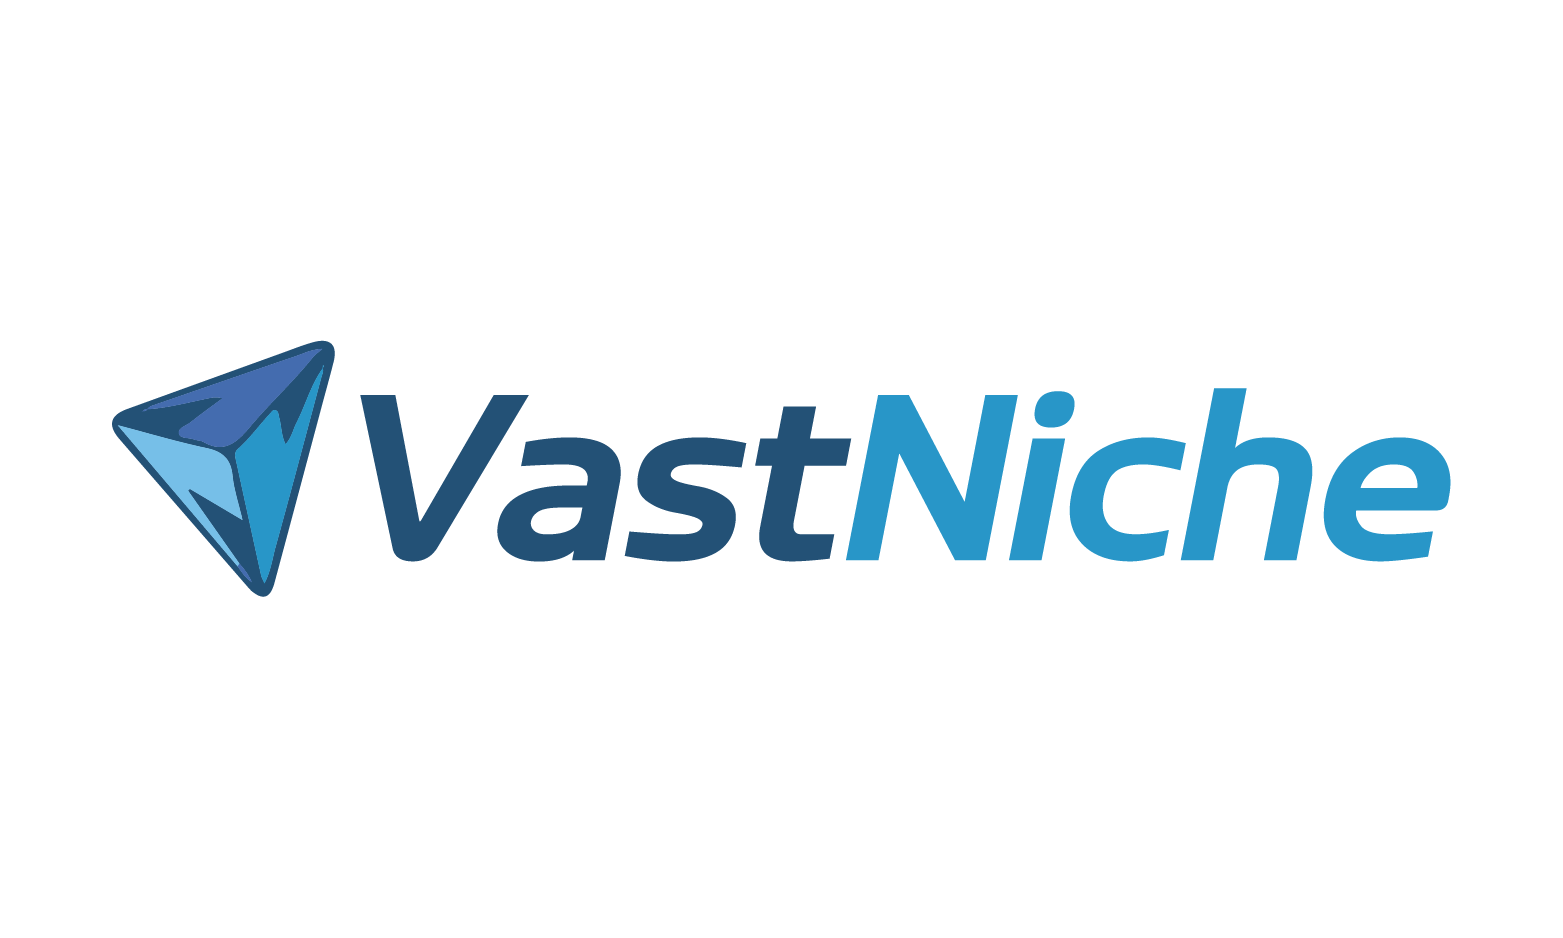 VastNiche.com - Creative brandable domain for sale